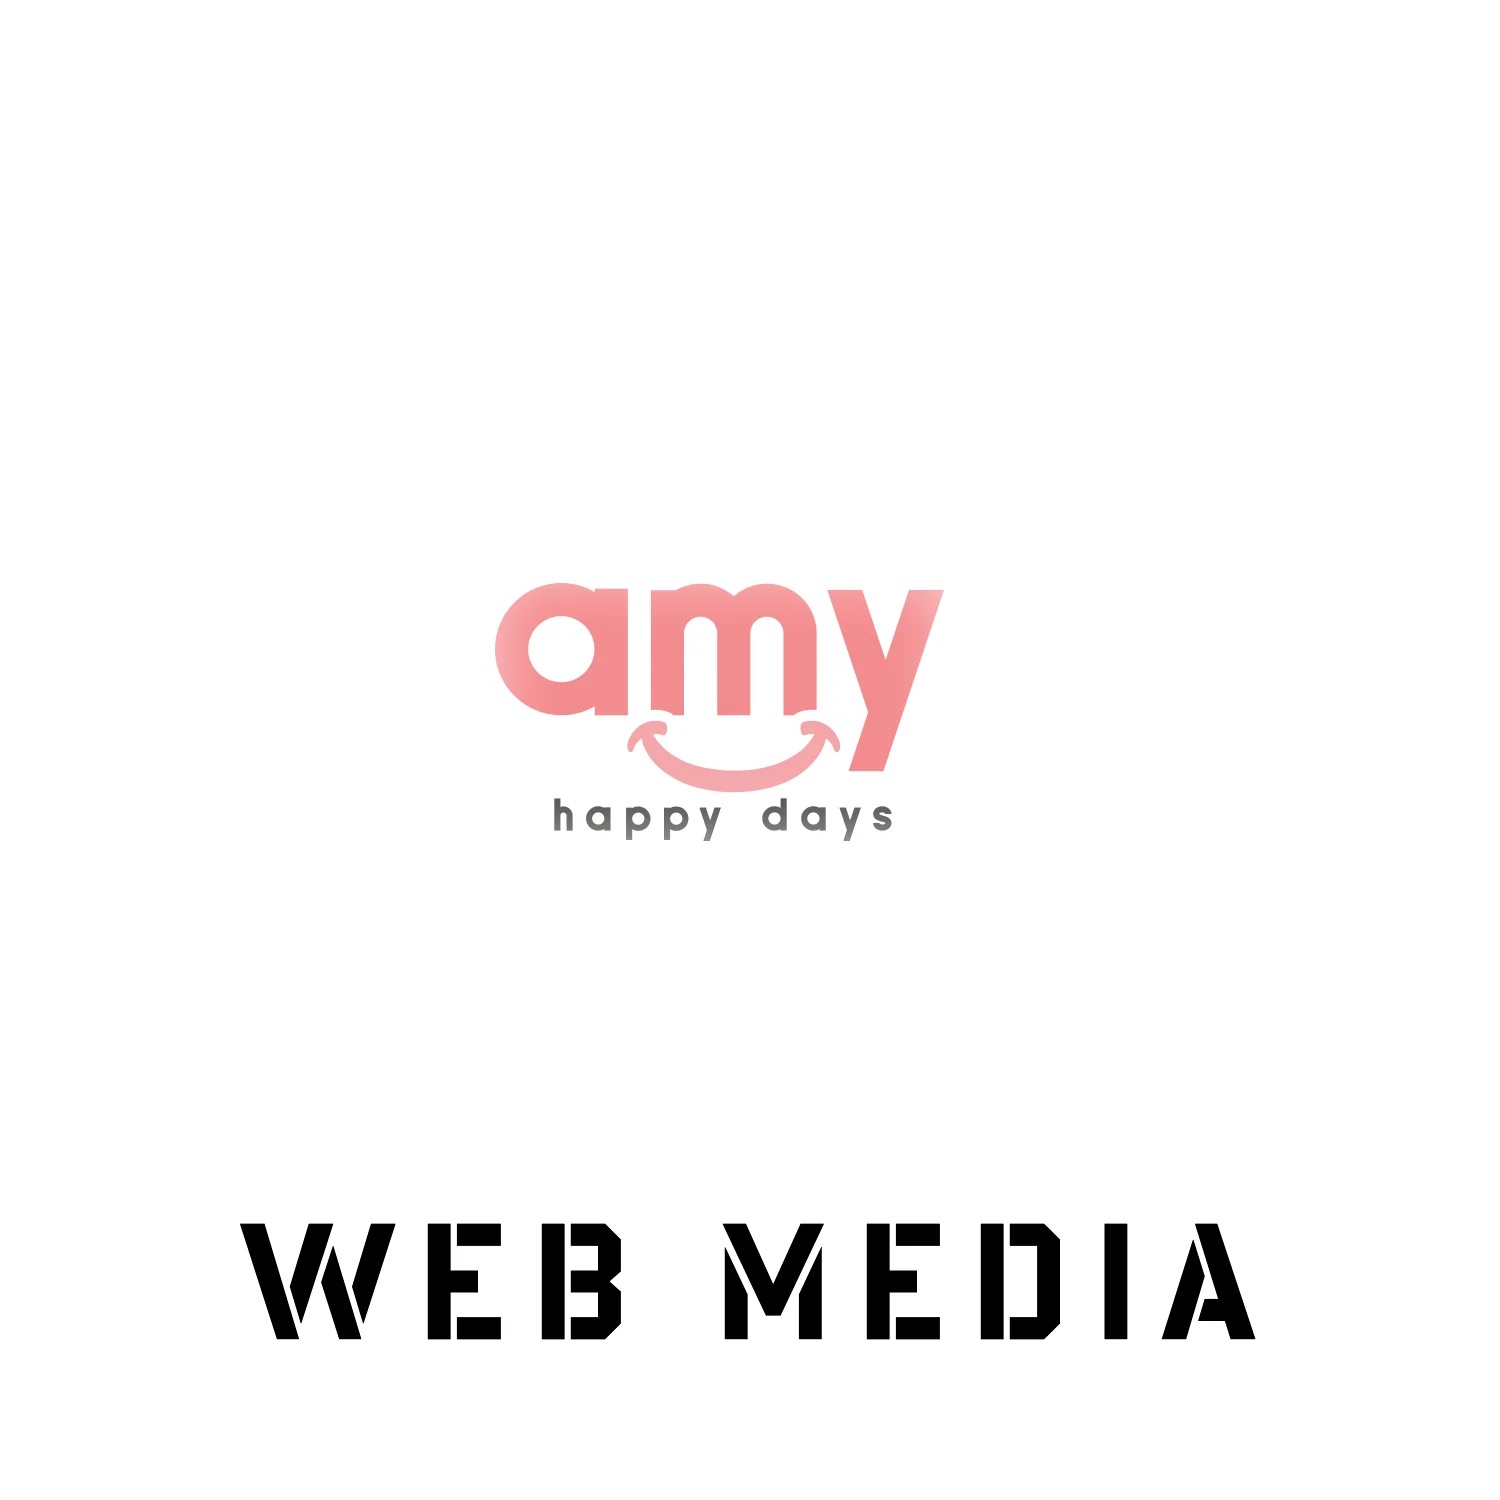 【WEB MEDIA】 Amy 8月17日 掲載 2020年8月22日